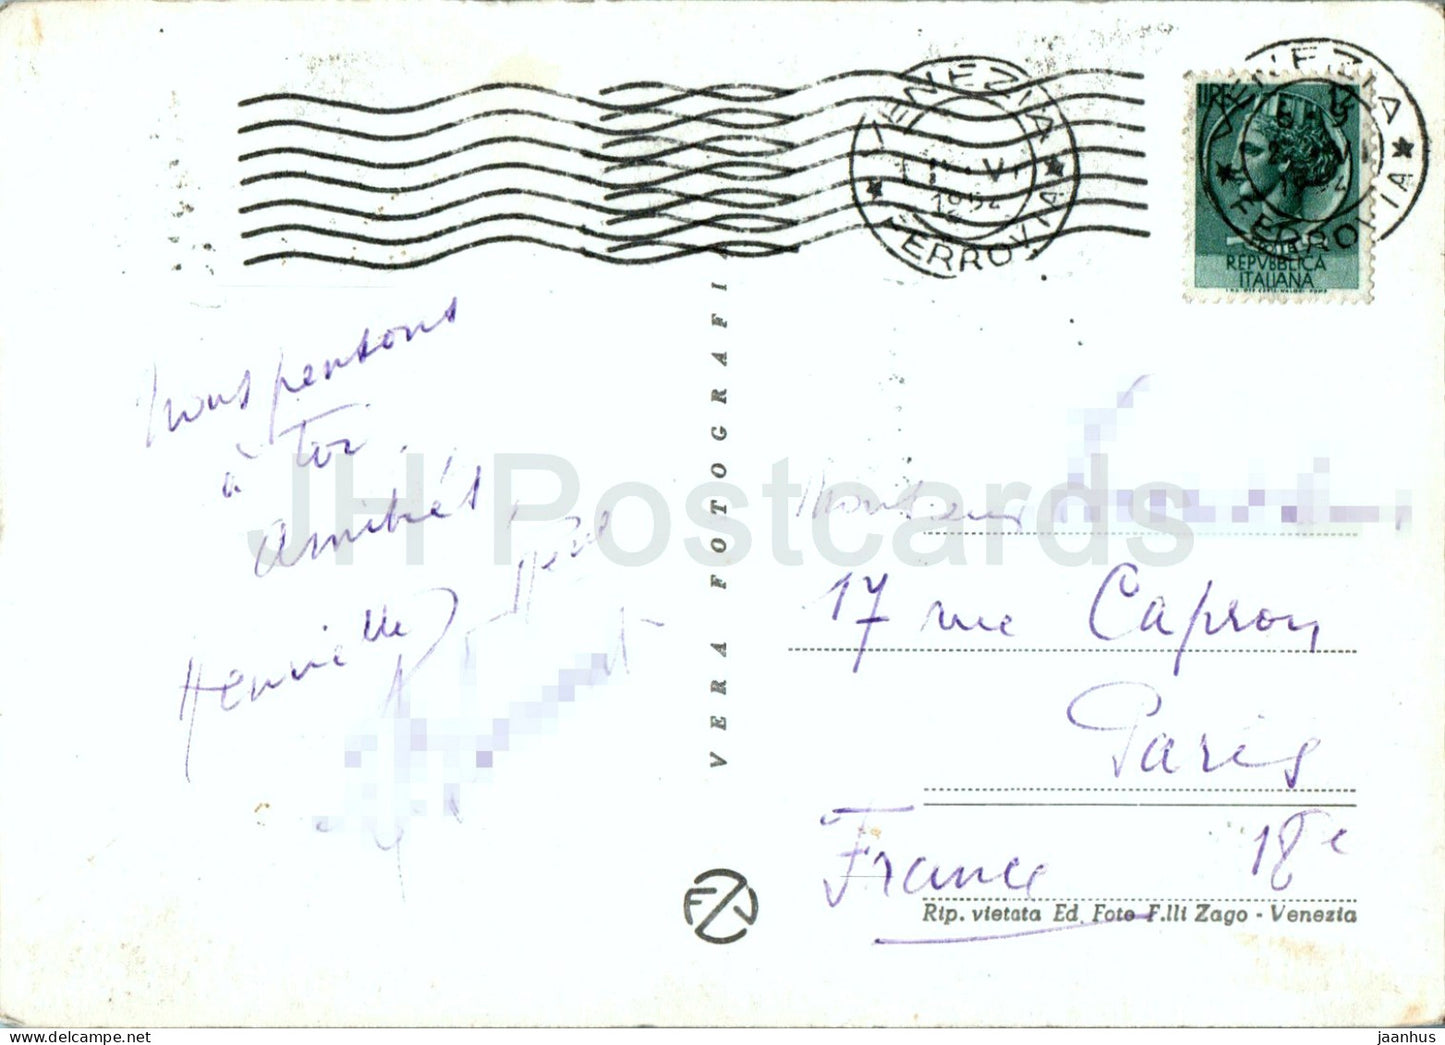 Venezia - Venise - Scorcio - gondole - bateau - 1009 - carte postale ancienne - 1954 - Italie - utilisé 